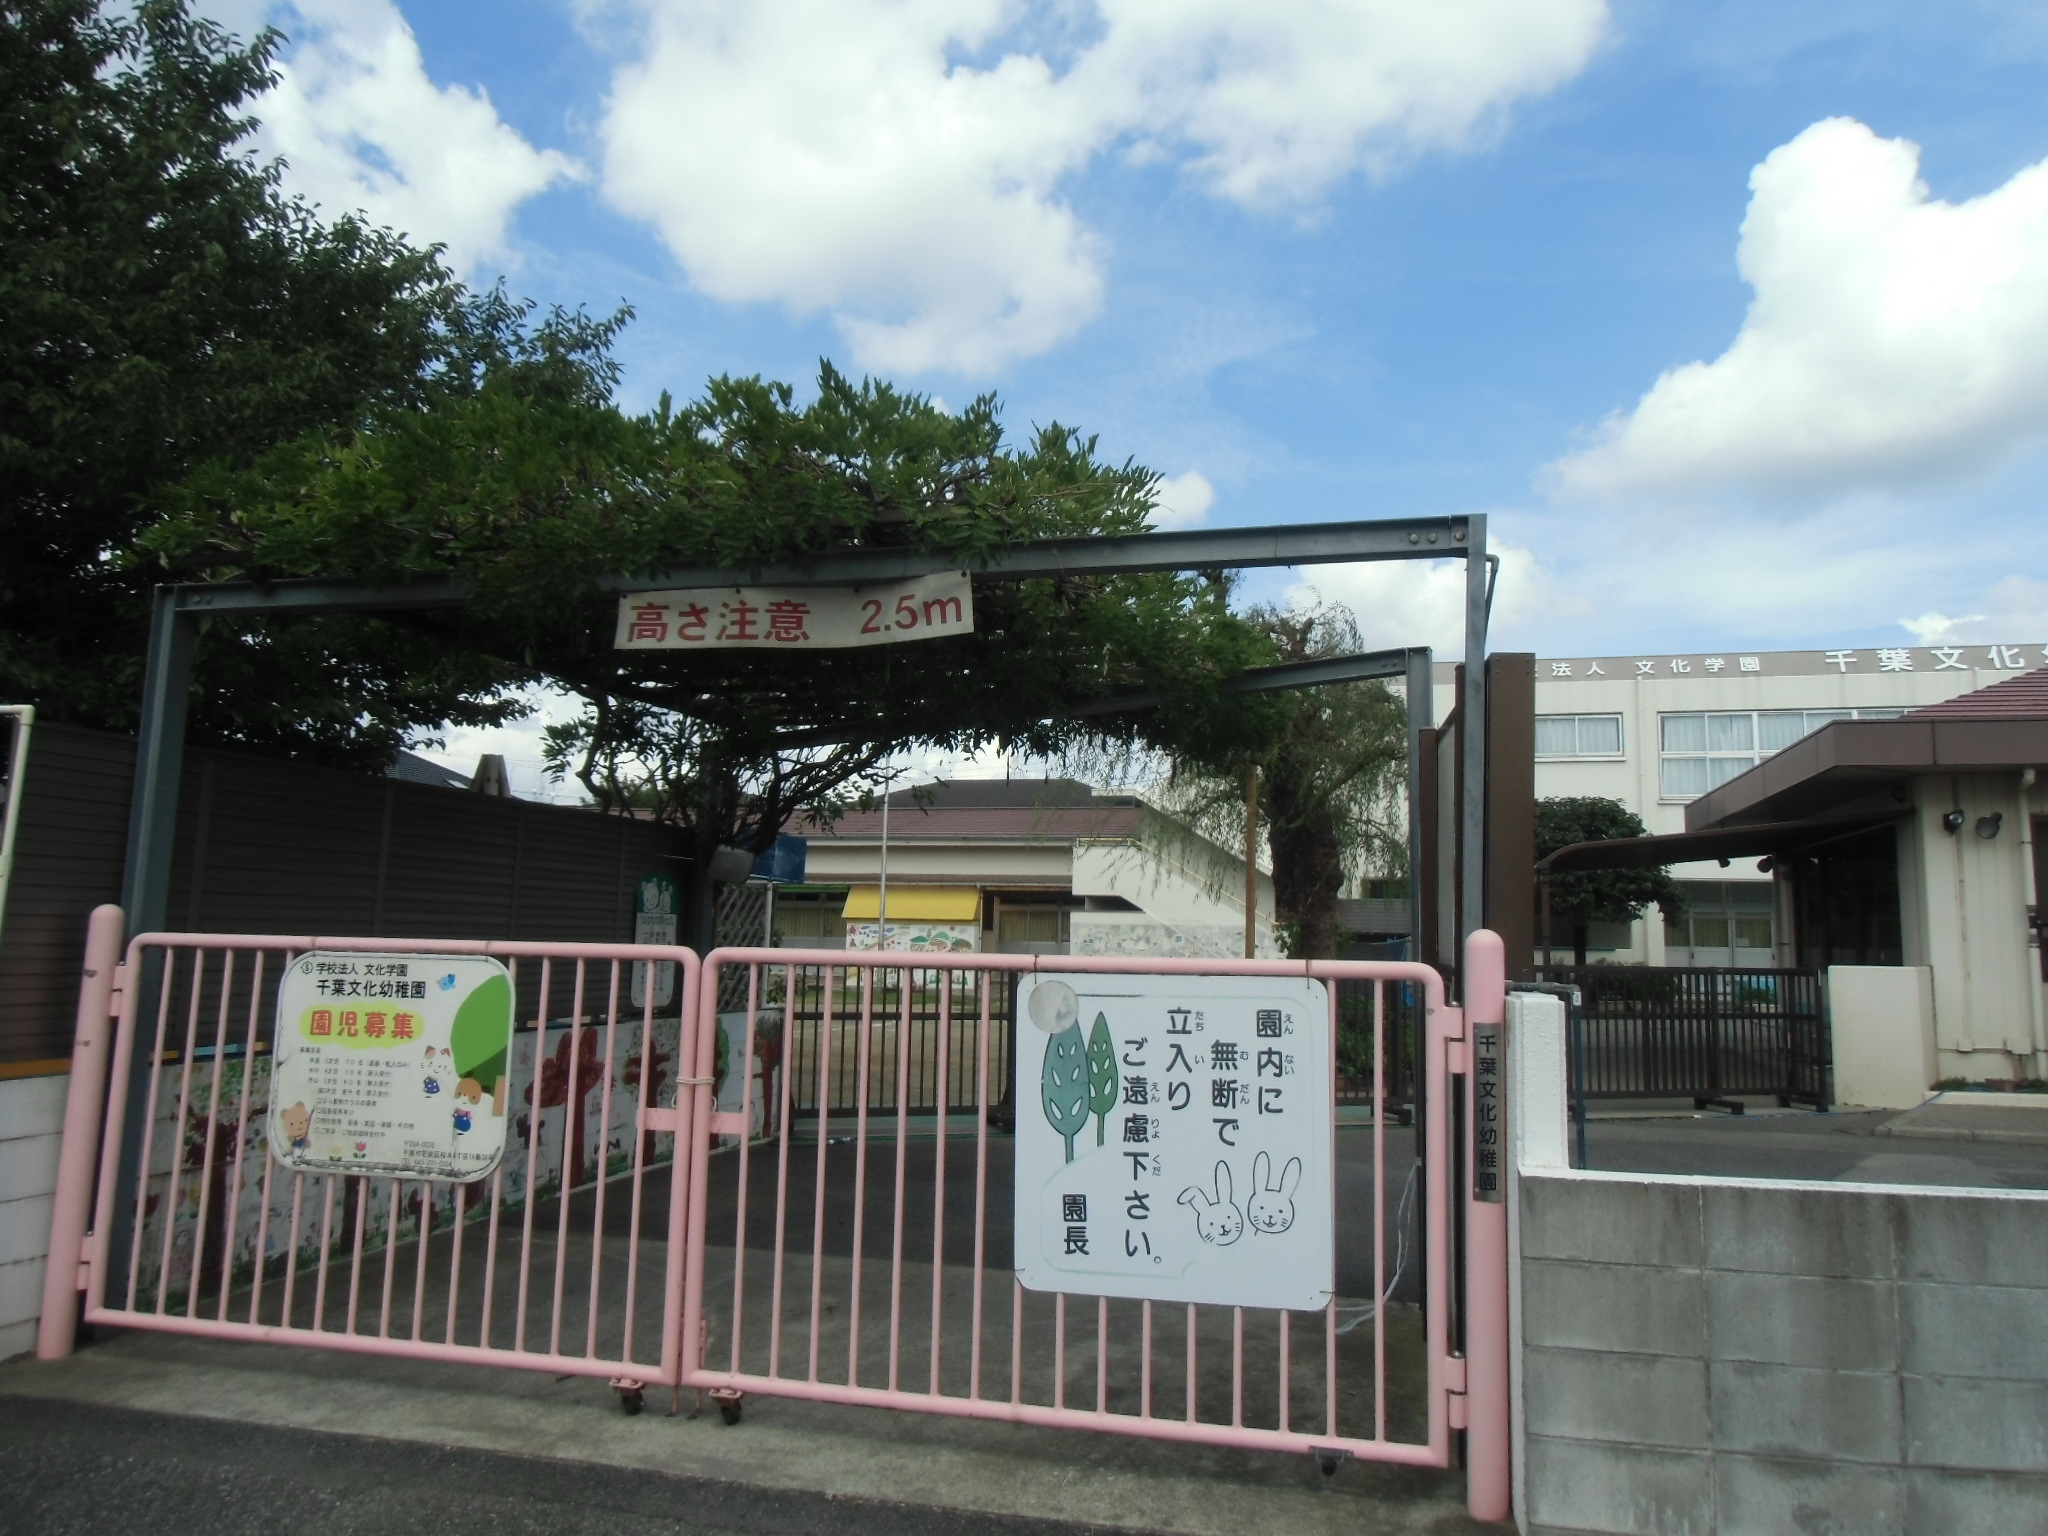 kindergarten ・ Nursery. Chiba culture kindergarten (kindergarten ・ 565m to the nursery)